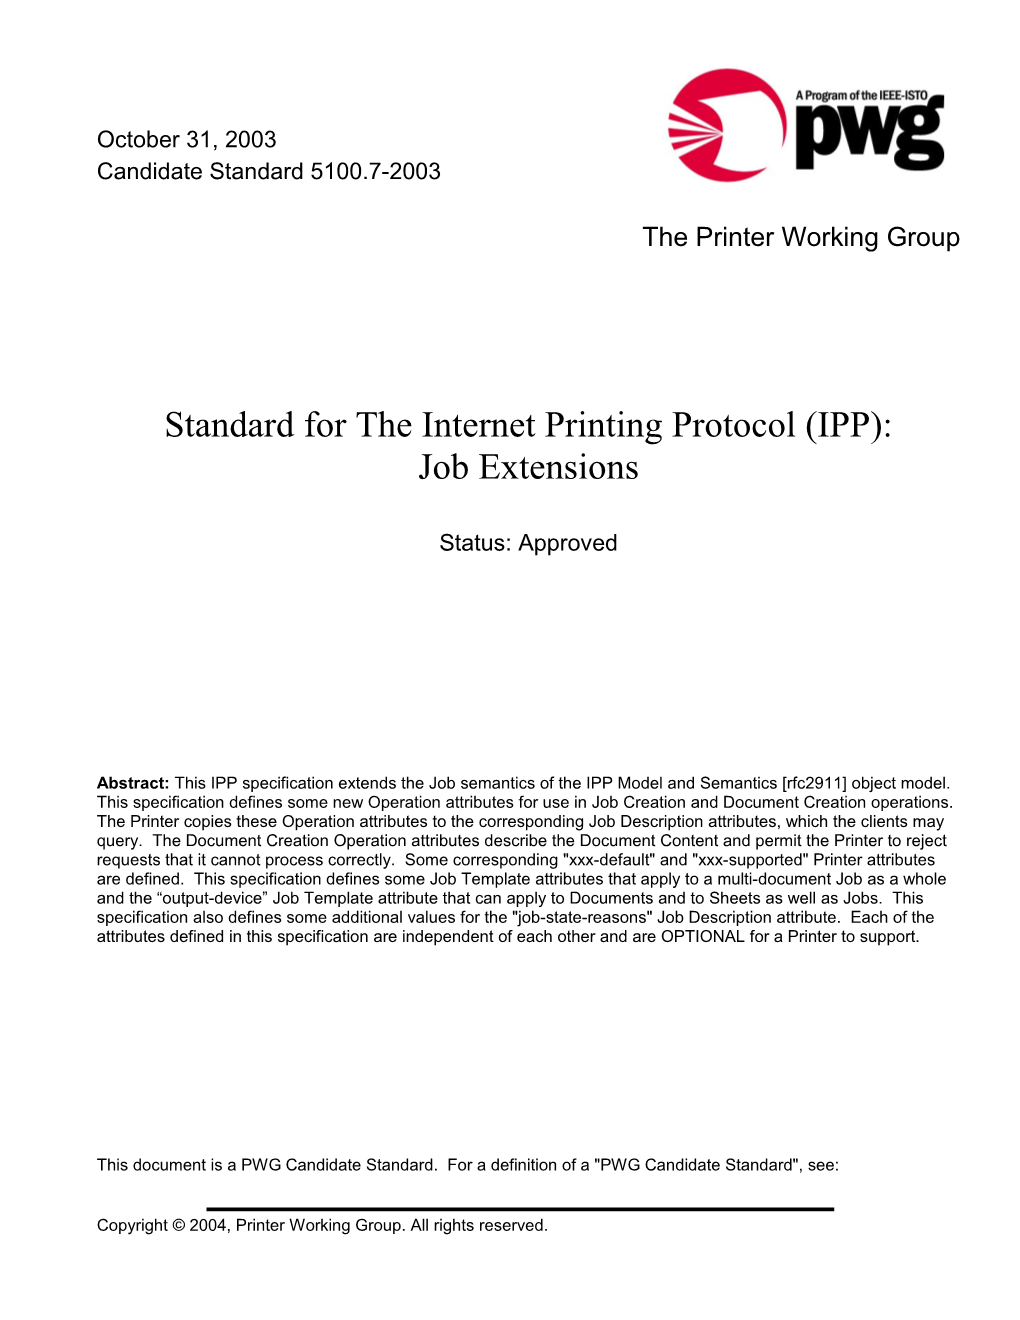 Standard for IPP Job Extensions